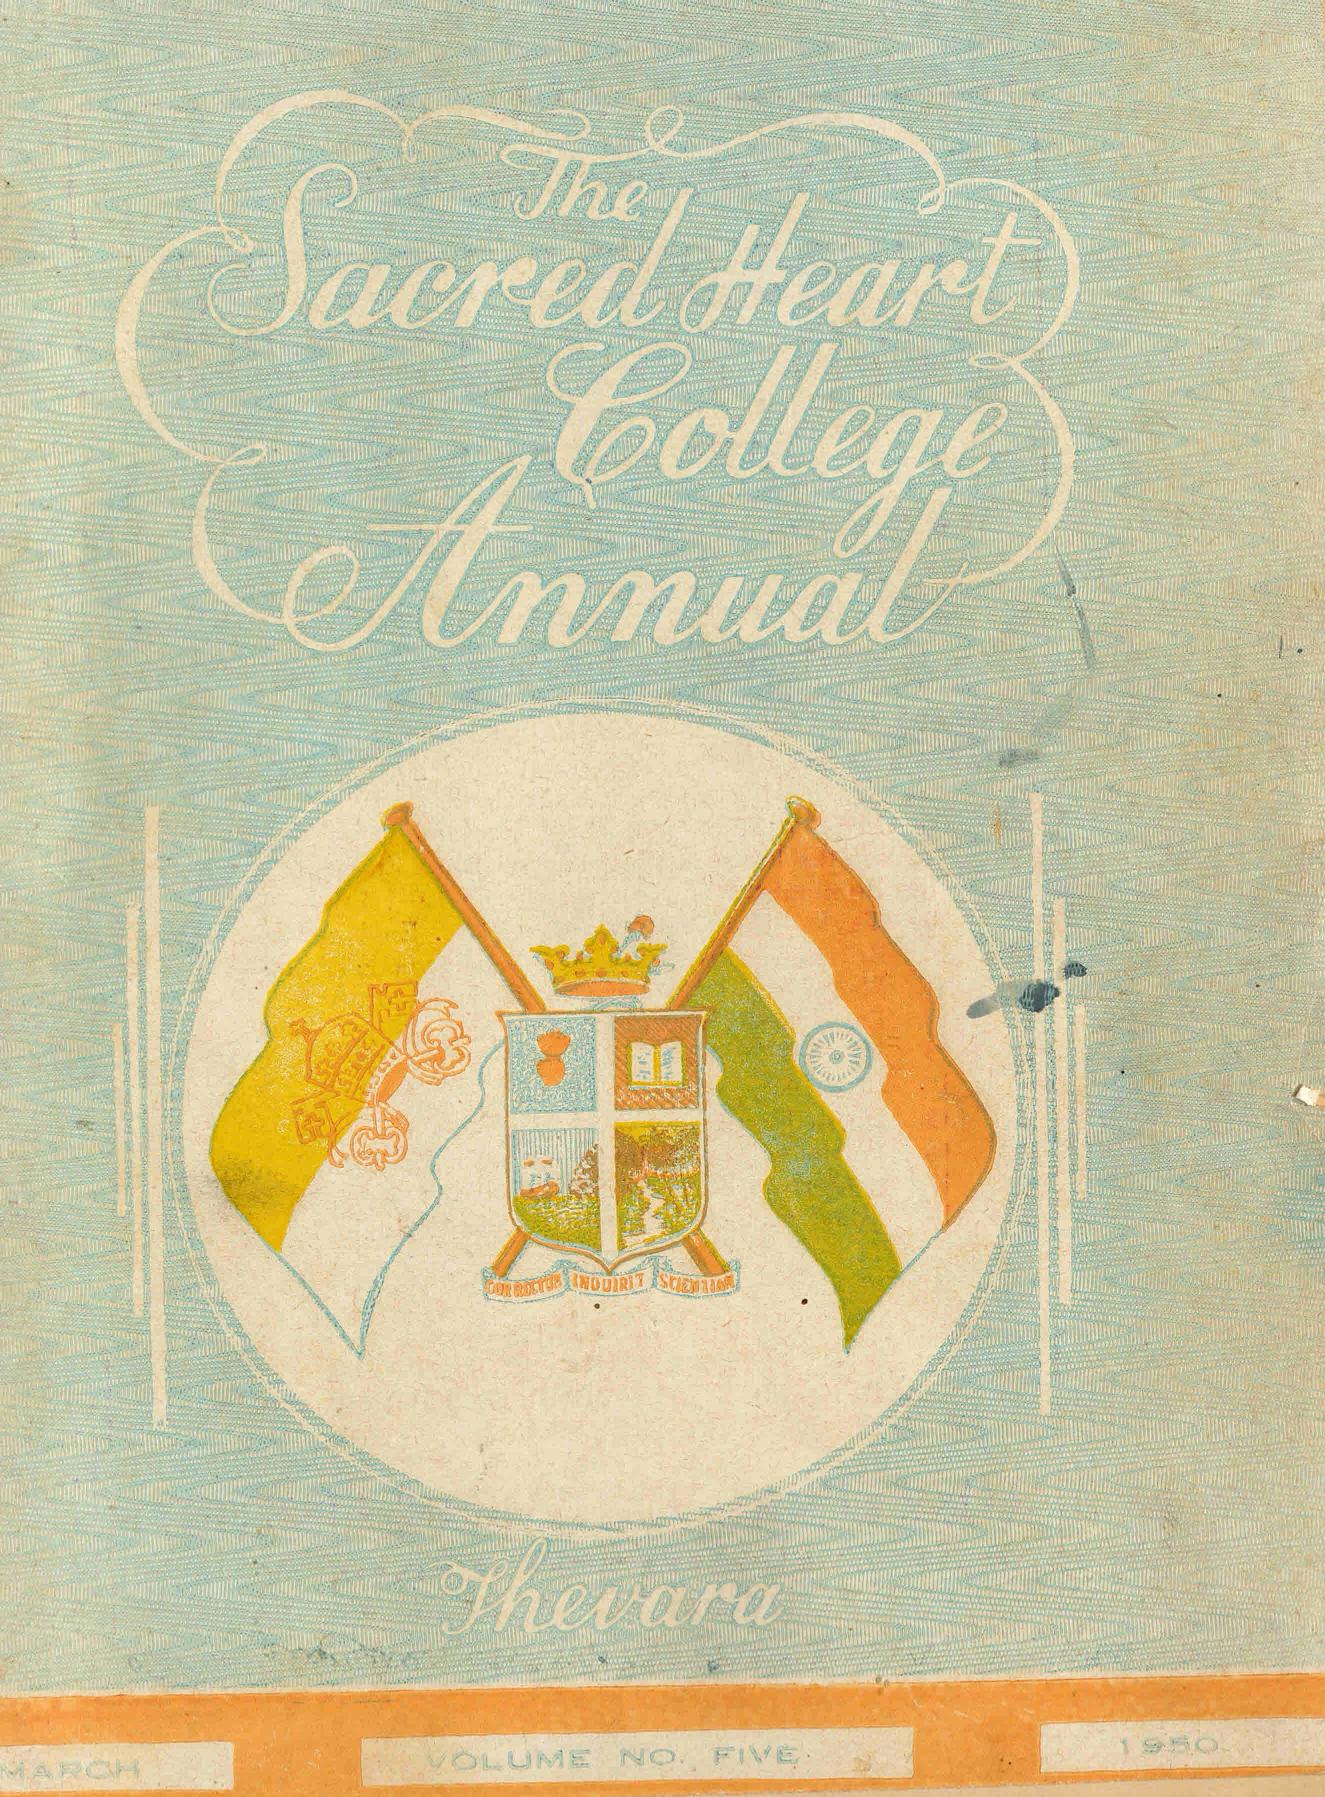 1950 - Sacred Heart College Annual - Thevara